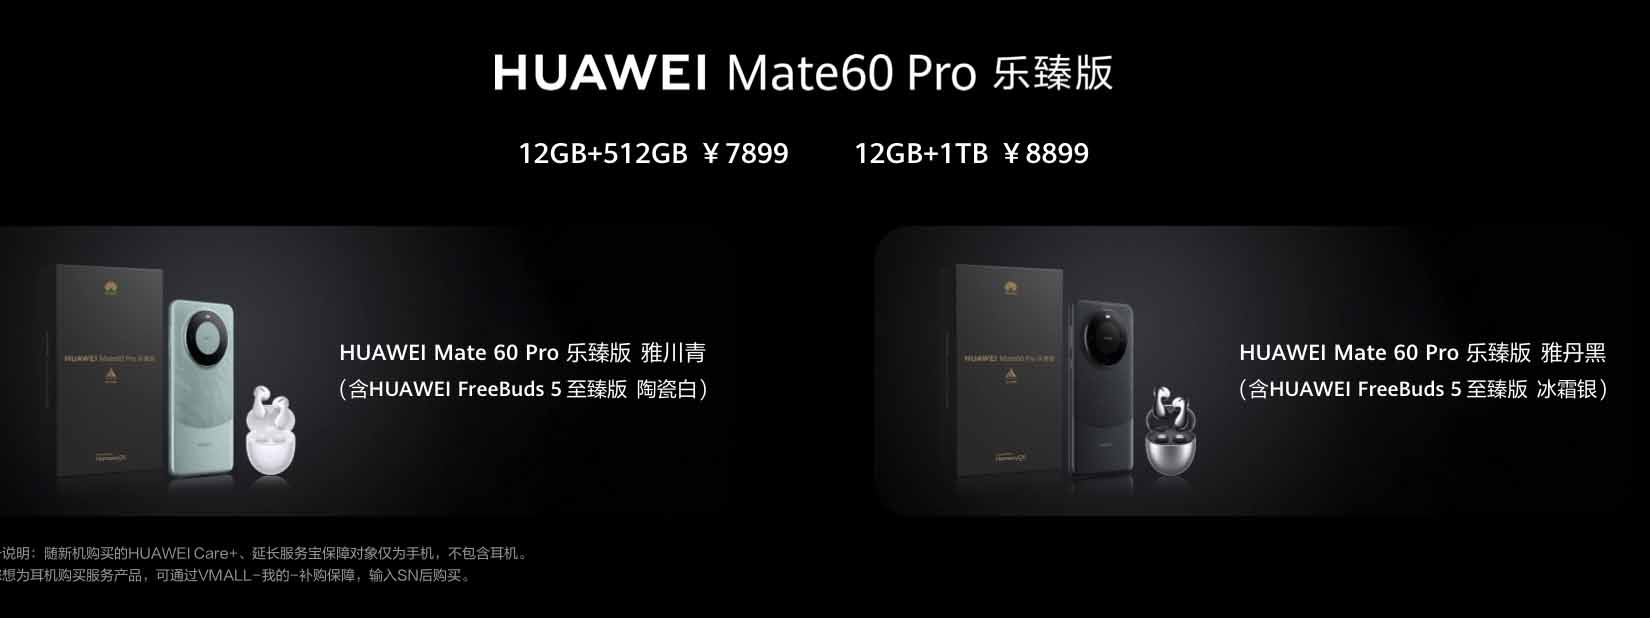 Huawei Mate 60 Pro Premium Edition